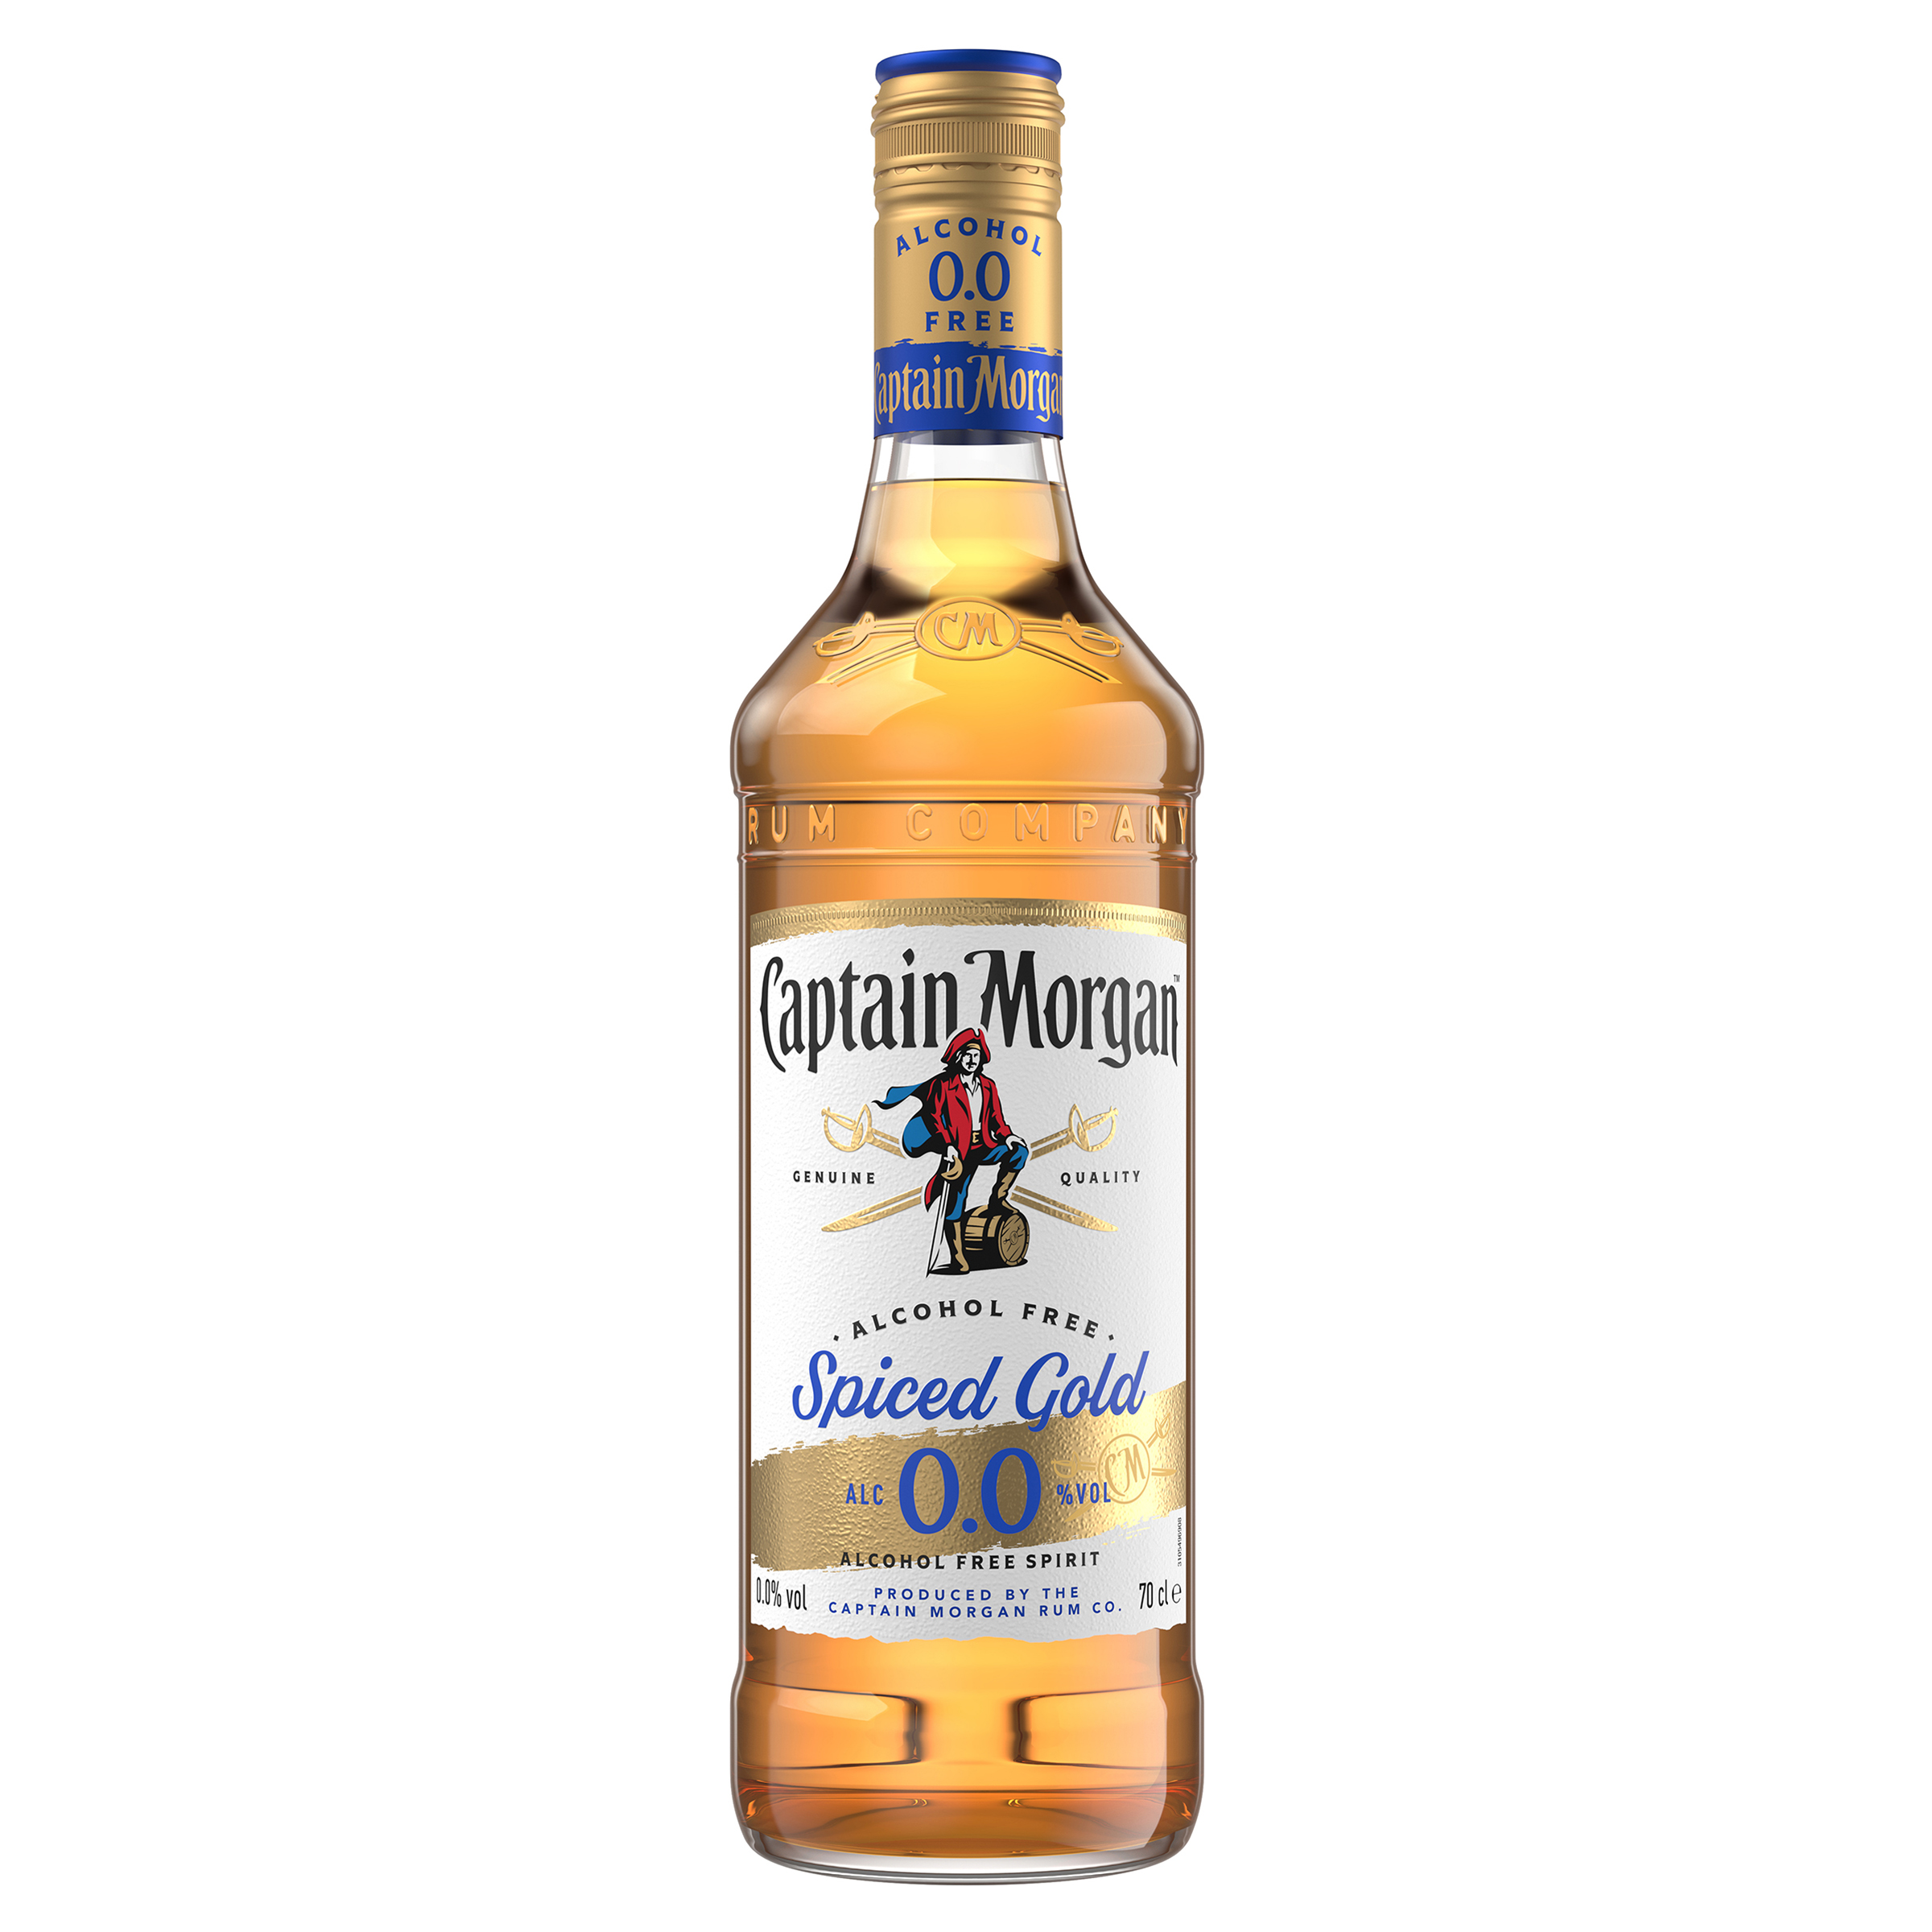 Morgan | Bar 0.0 Gold Alcohol Spirit, Spiced Free Captain The 70cl